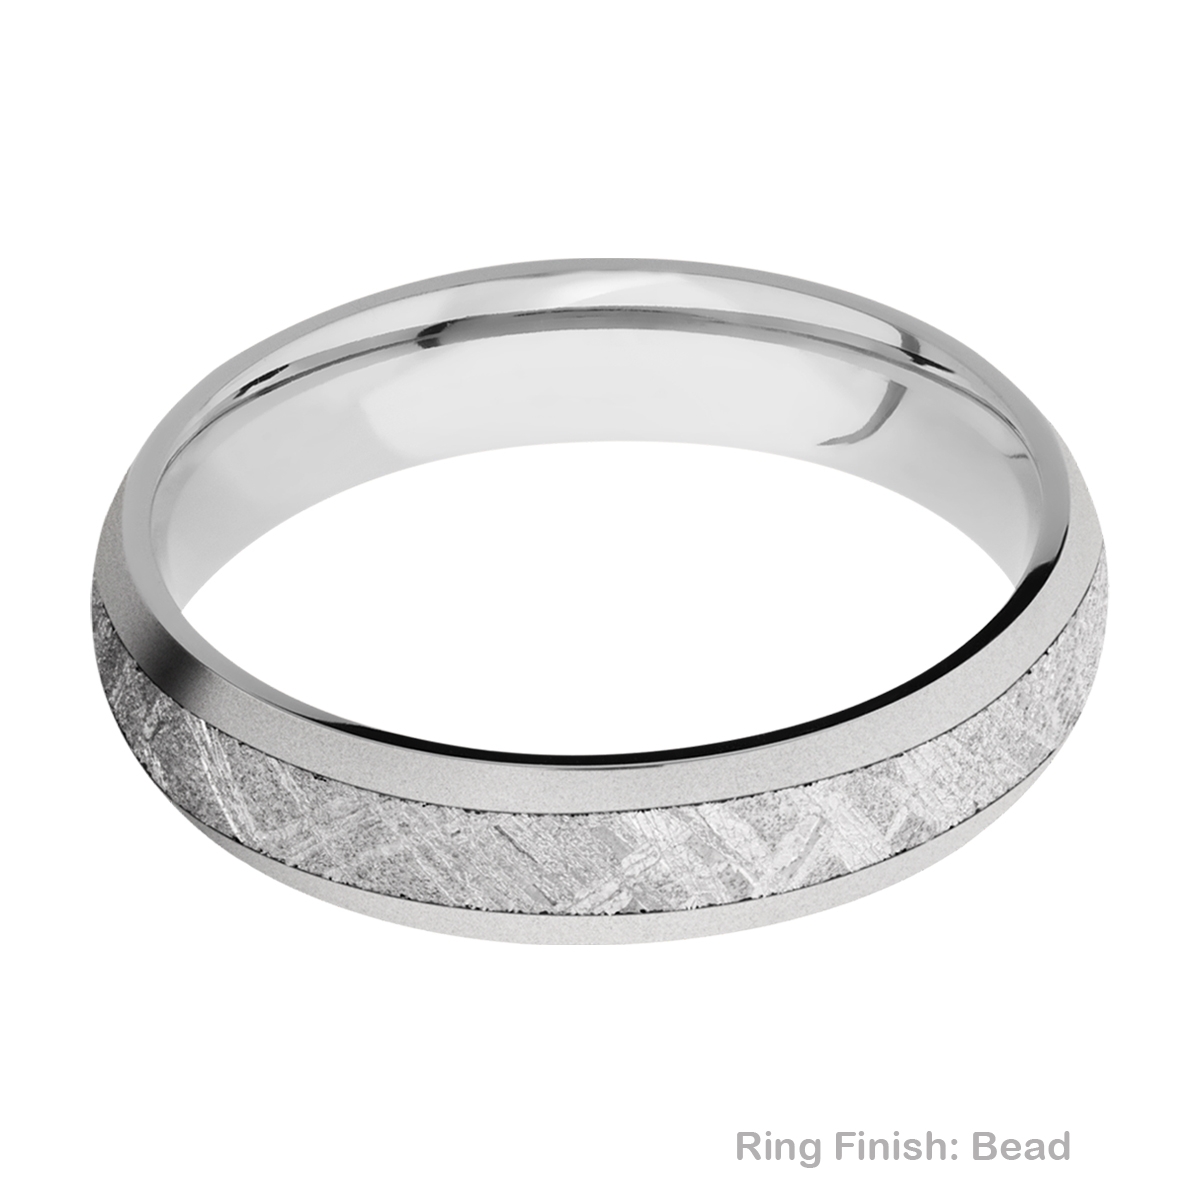 Lashbrook CC5D13/METEORITE Cobalt Chrome Wedding Ring or Band Alternative View 2